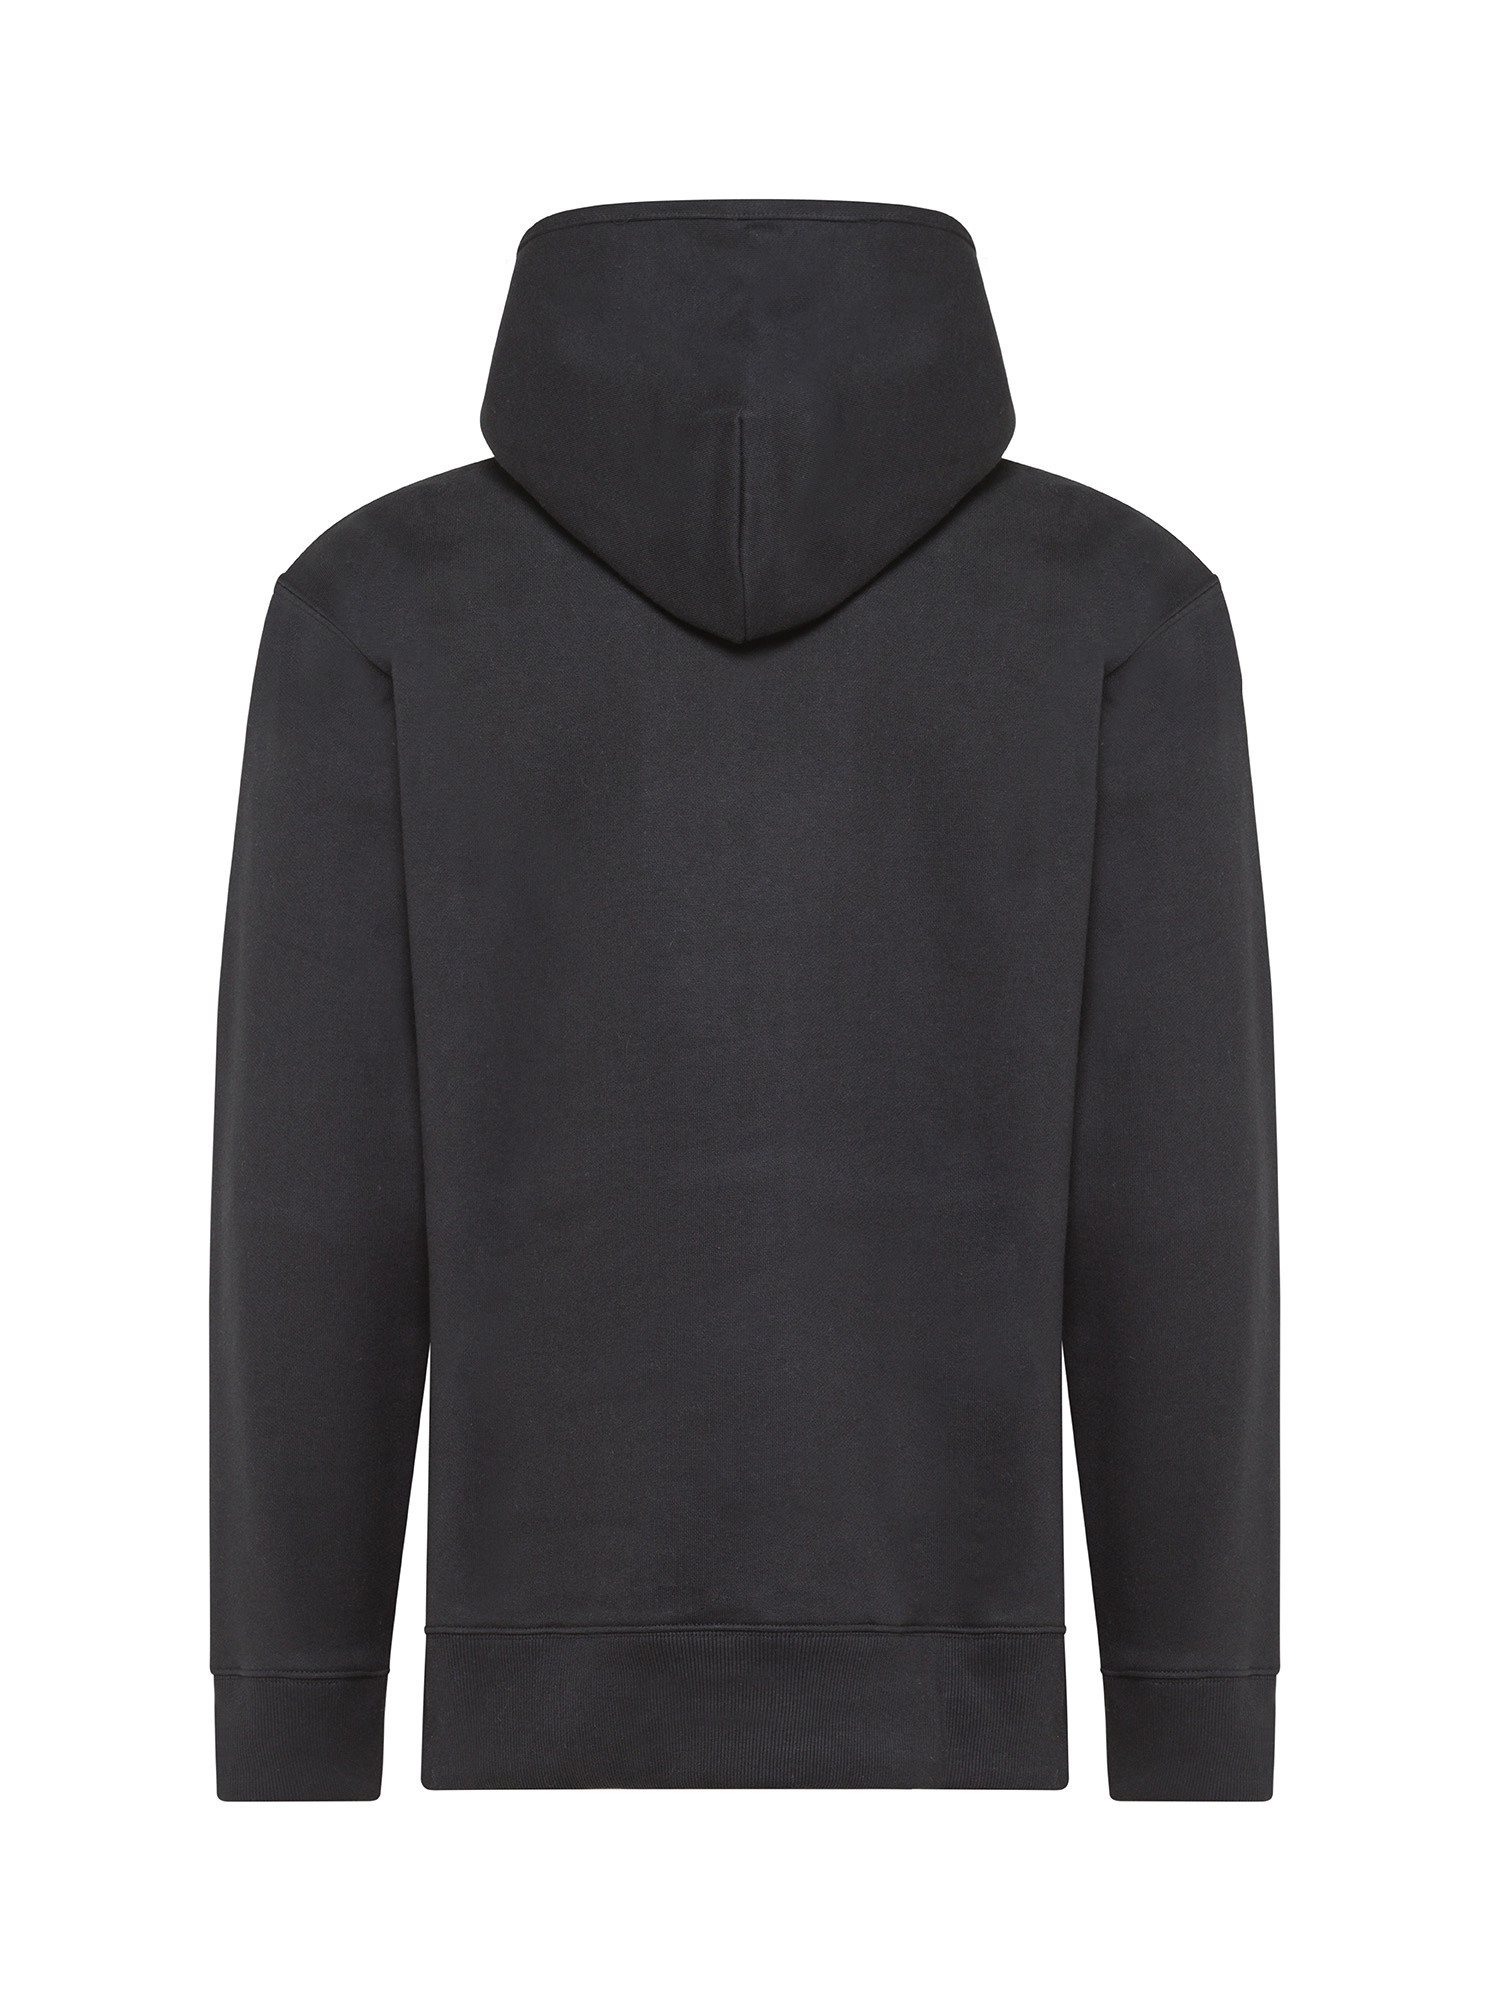 Adidas - Hooded sweatshirt adicolor, Black, large image number 1